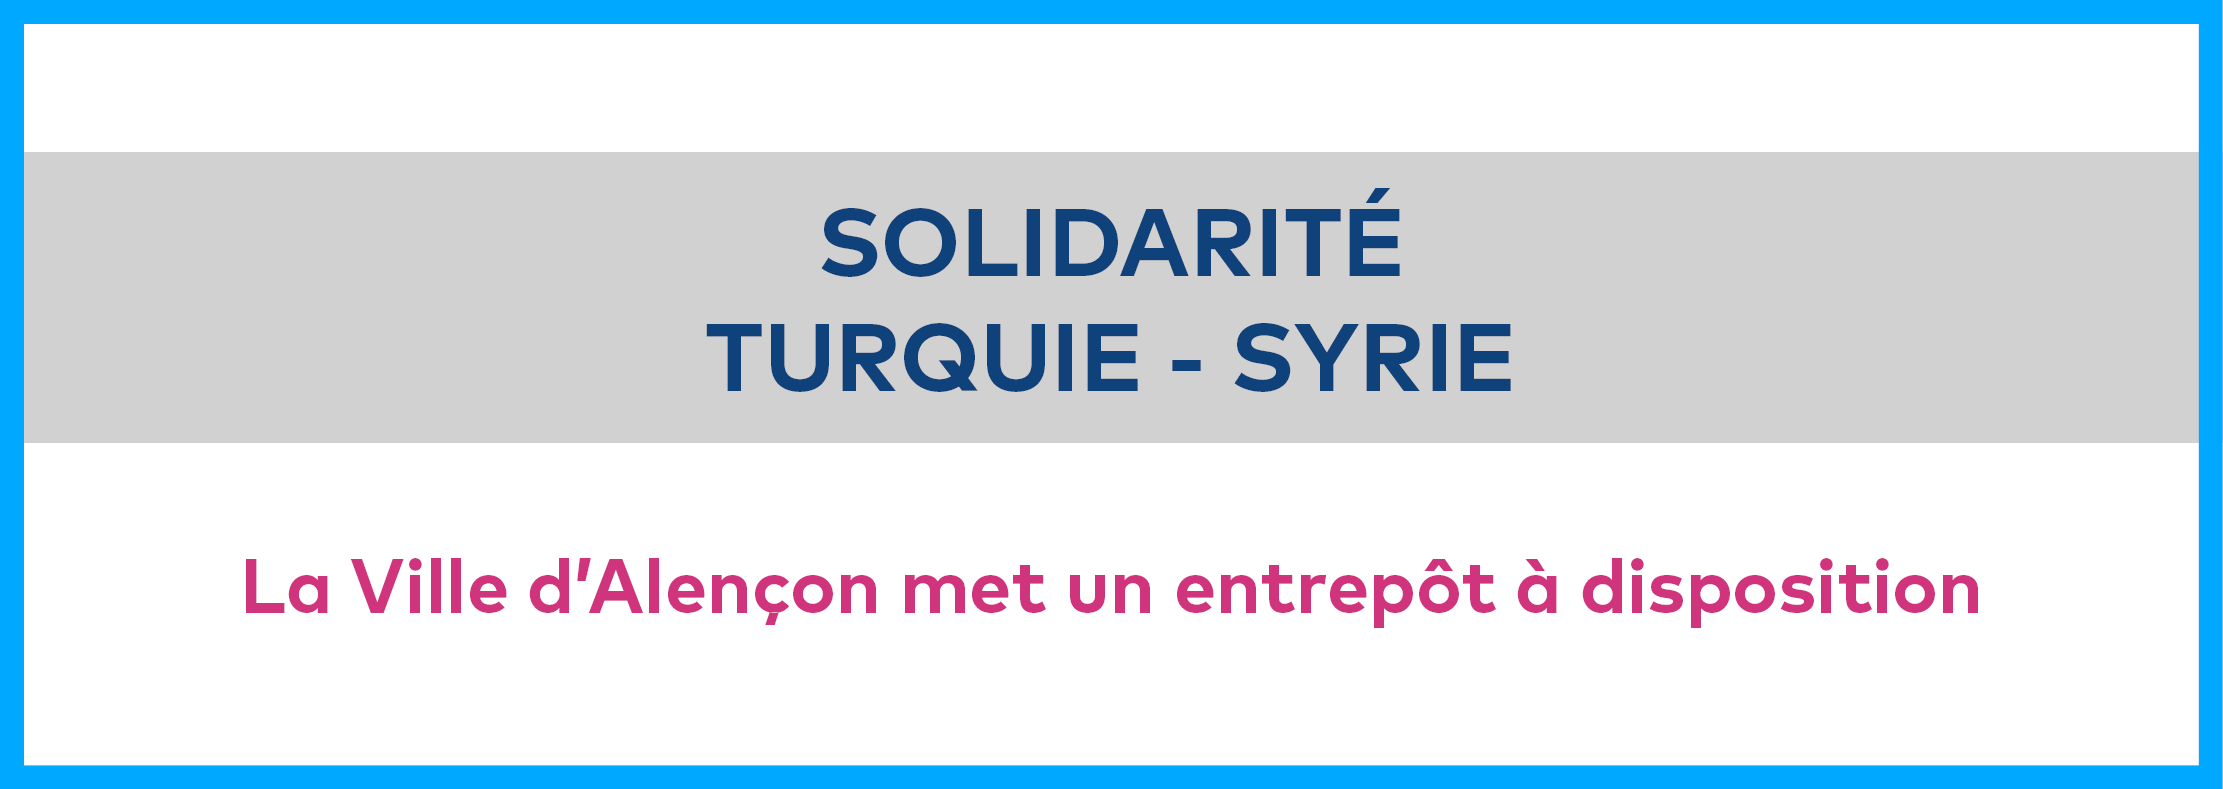 Bandeau illustration Solidarité Turquie - Syrie